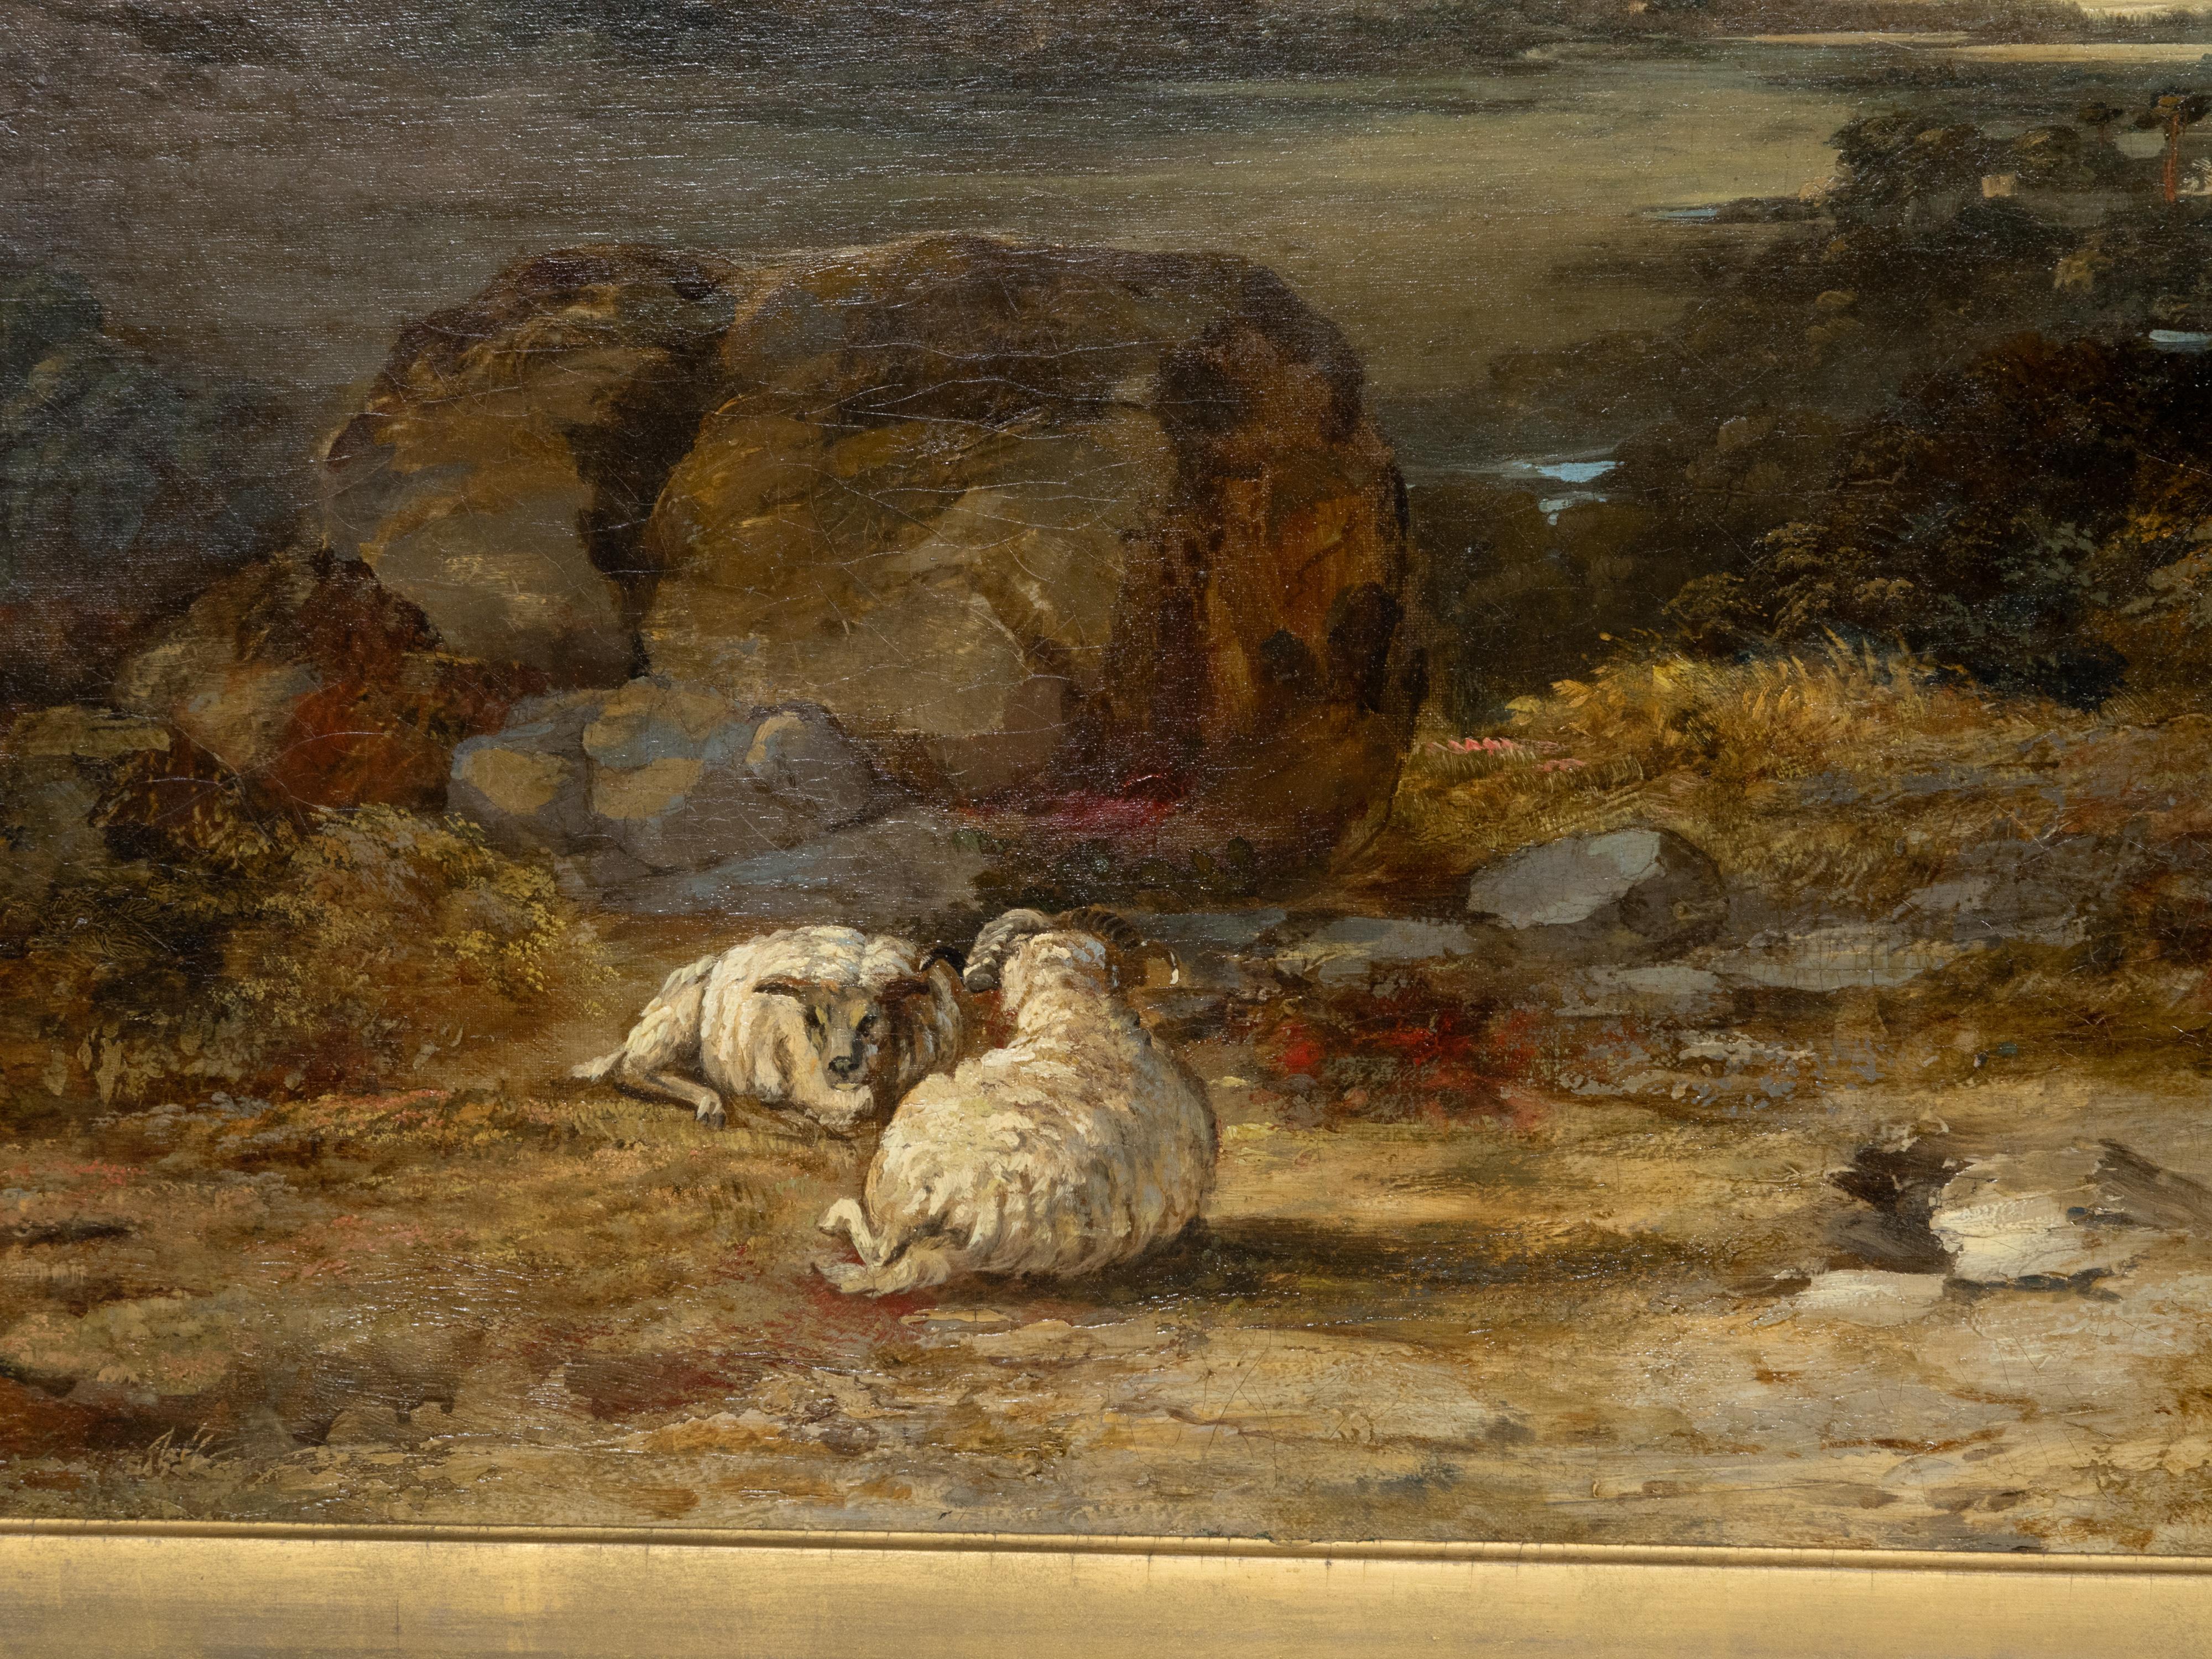 Carved Signed Robert Tonge 1847 Oil on Canvas Pastoral Landscape Painting in Gilt Frame For Sale